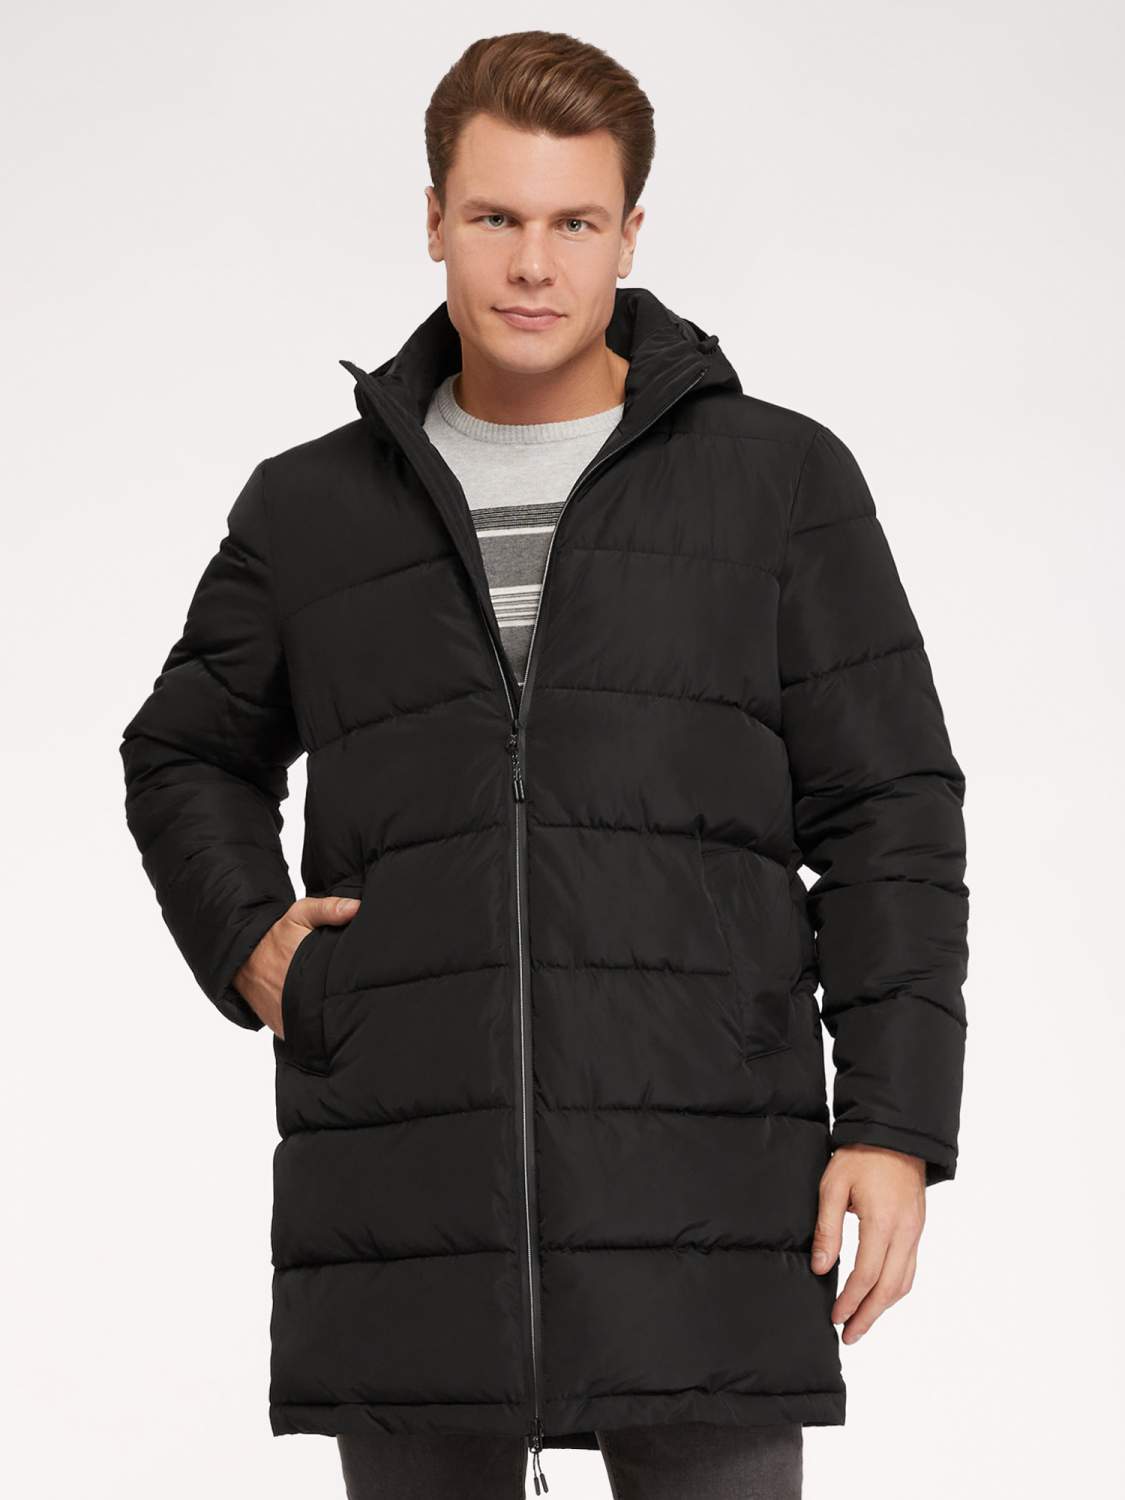 Куртка мужская oodji 1L126001M черная 2XL - отзывы на маркетплейсеМегамаркет